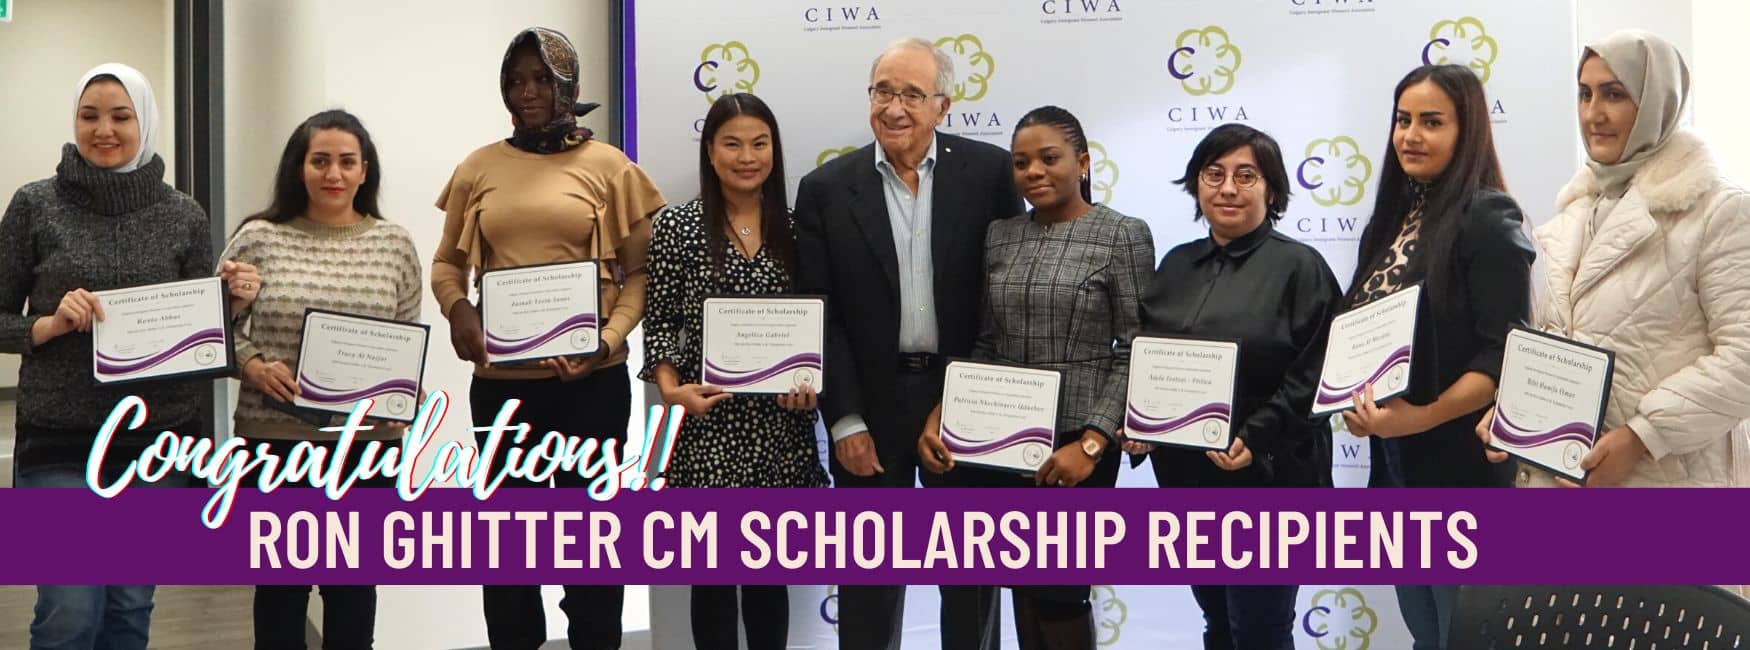 Ron Ghitter CM Scholarship Recipients